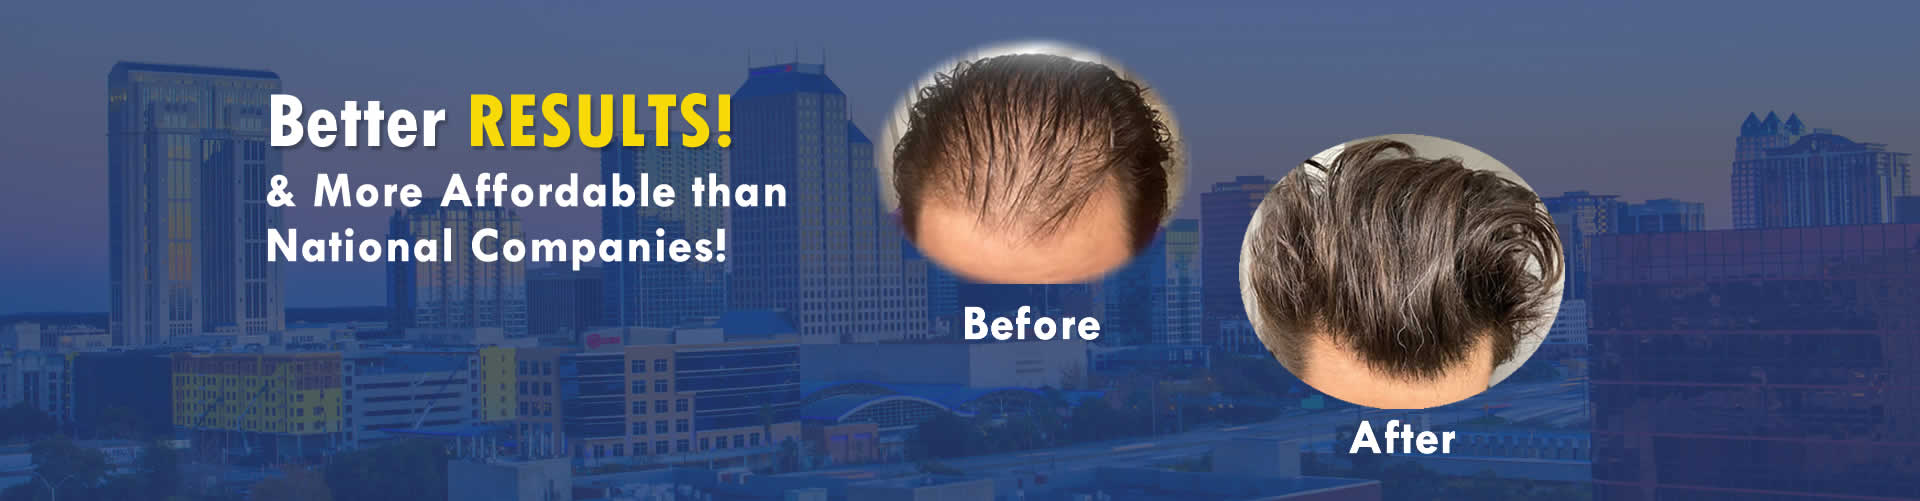 Best Hair Transplant Results in Orlando